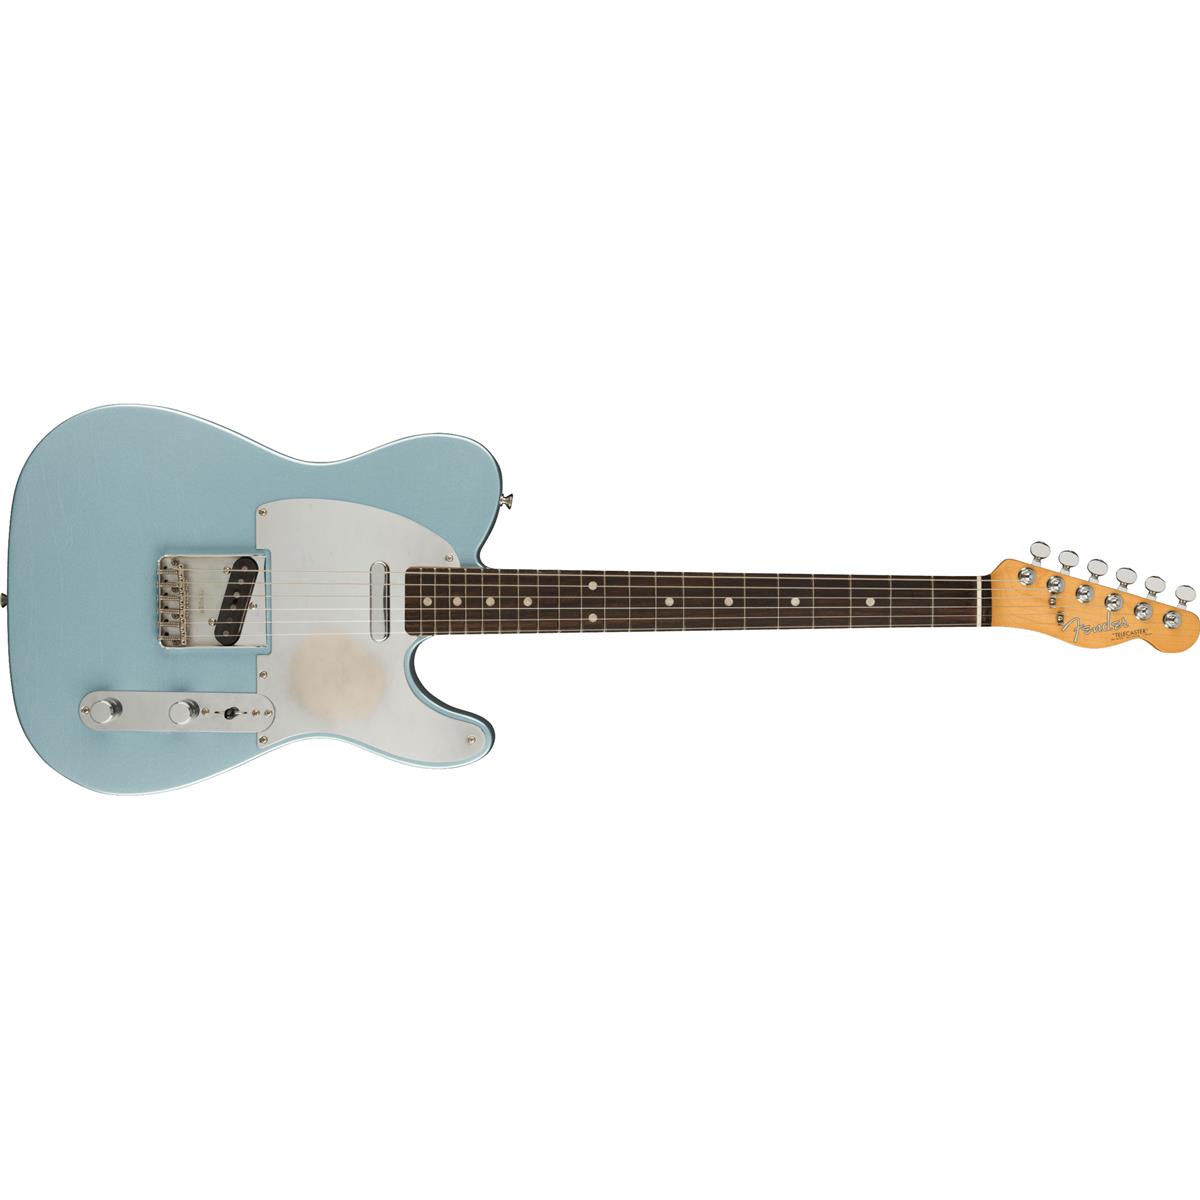 Fender Chrissie Hynde Telecaster Electric Guitar $999 + free s/h